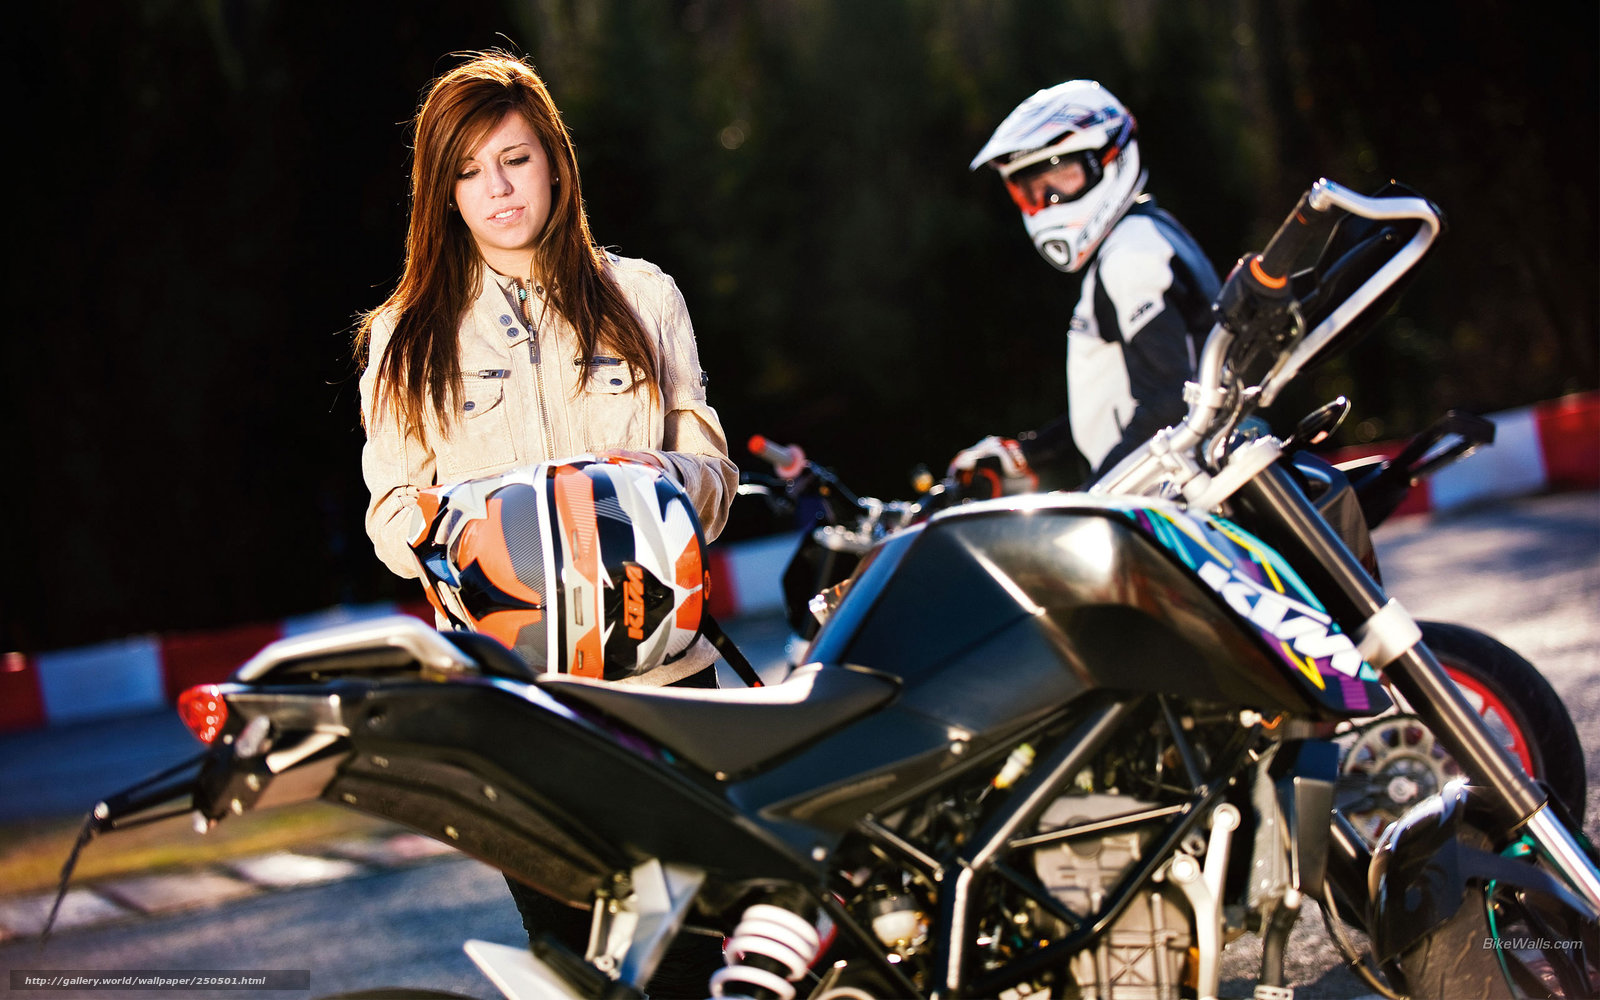 ktm duke 125 wallpaper,motorcycle,vehicle,motorcycling,motorcycle racing,motocross